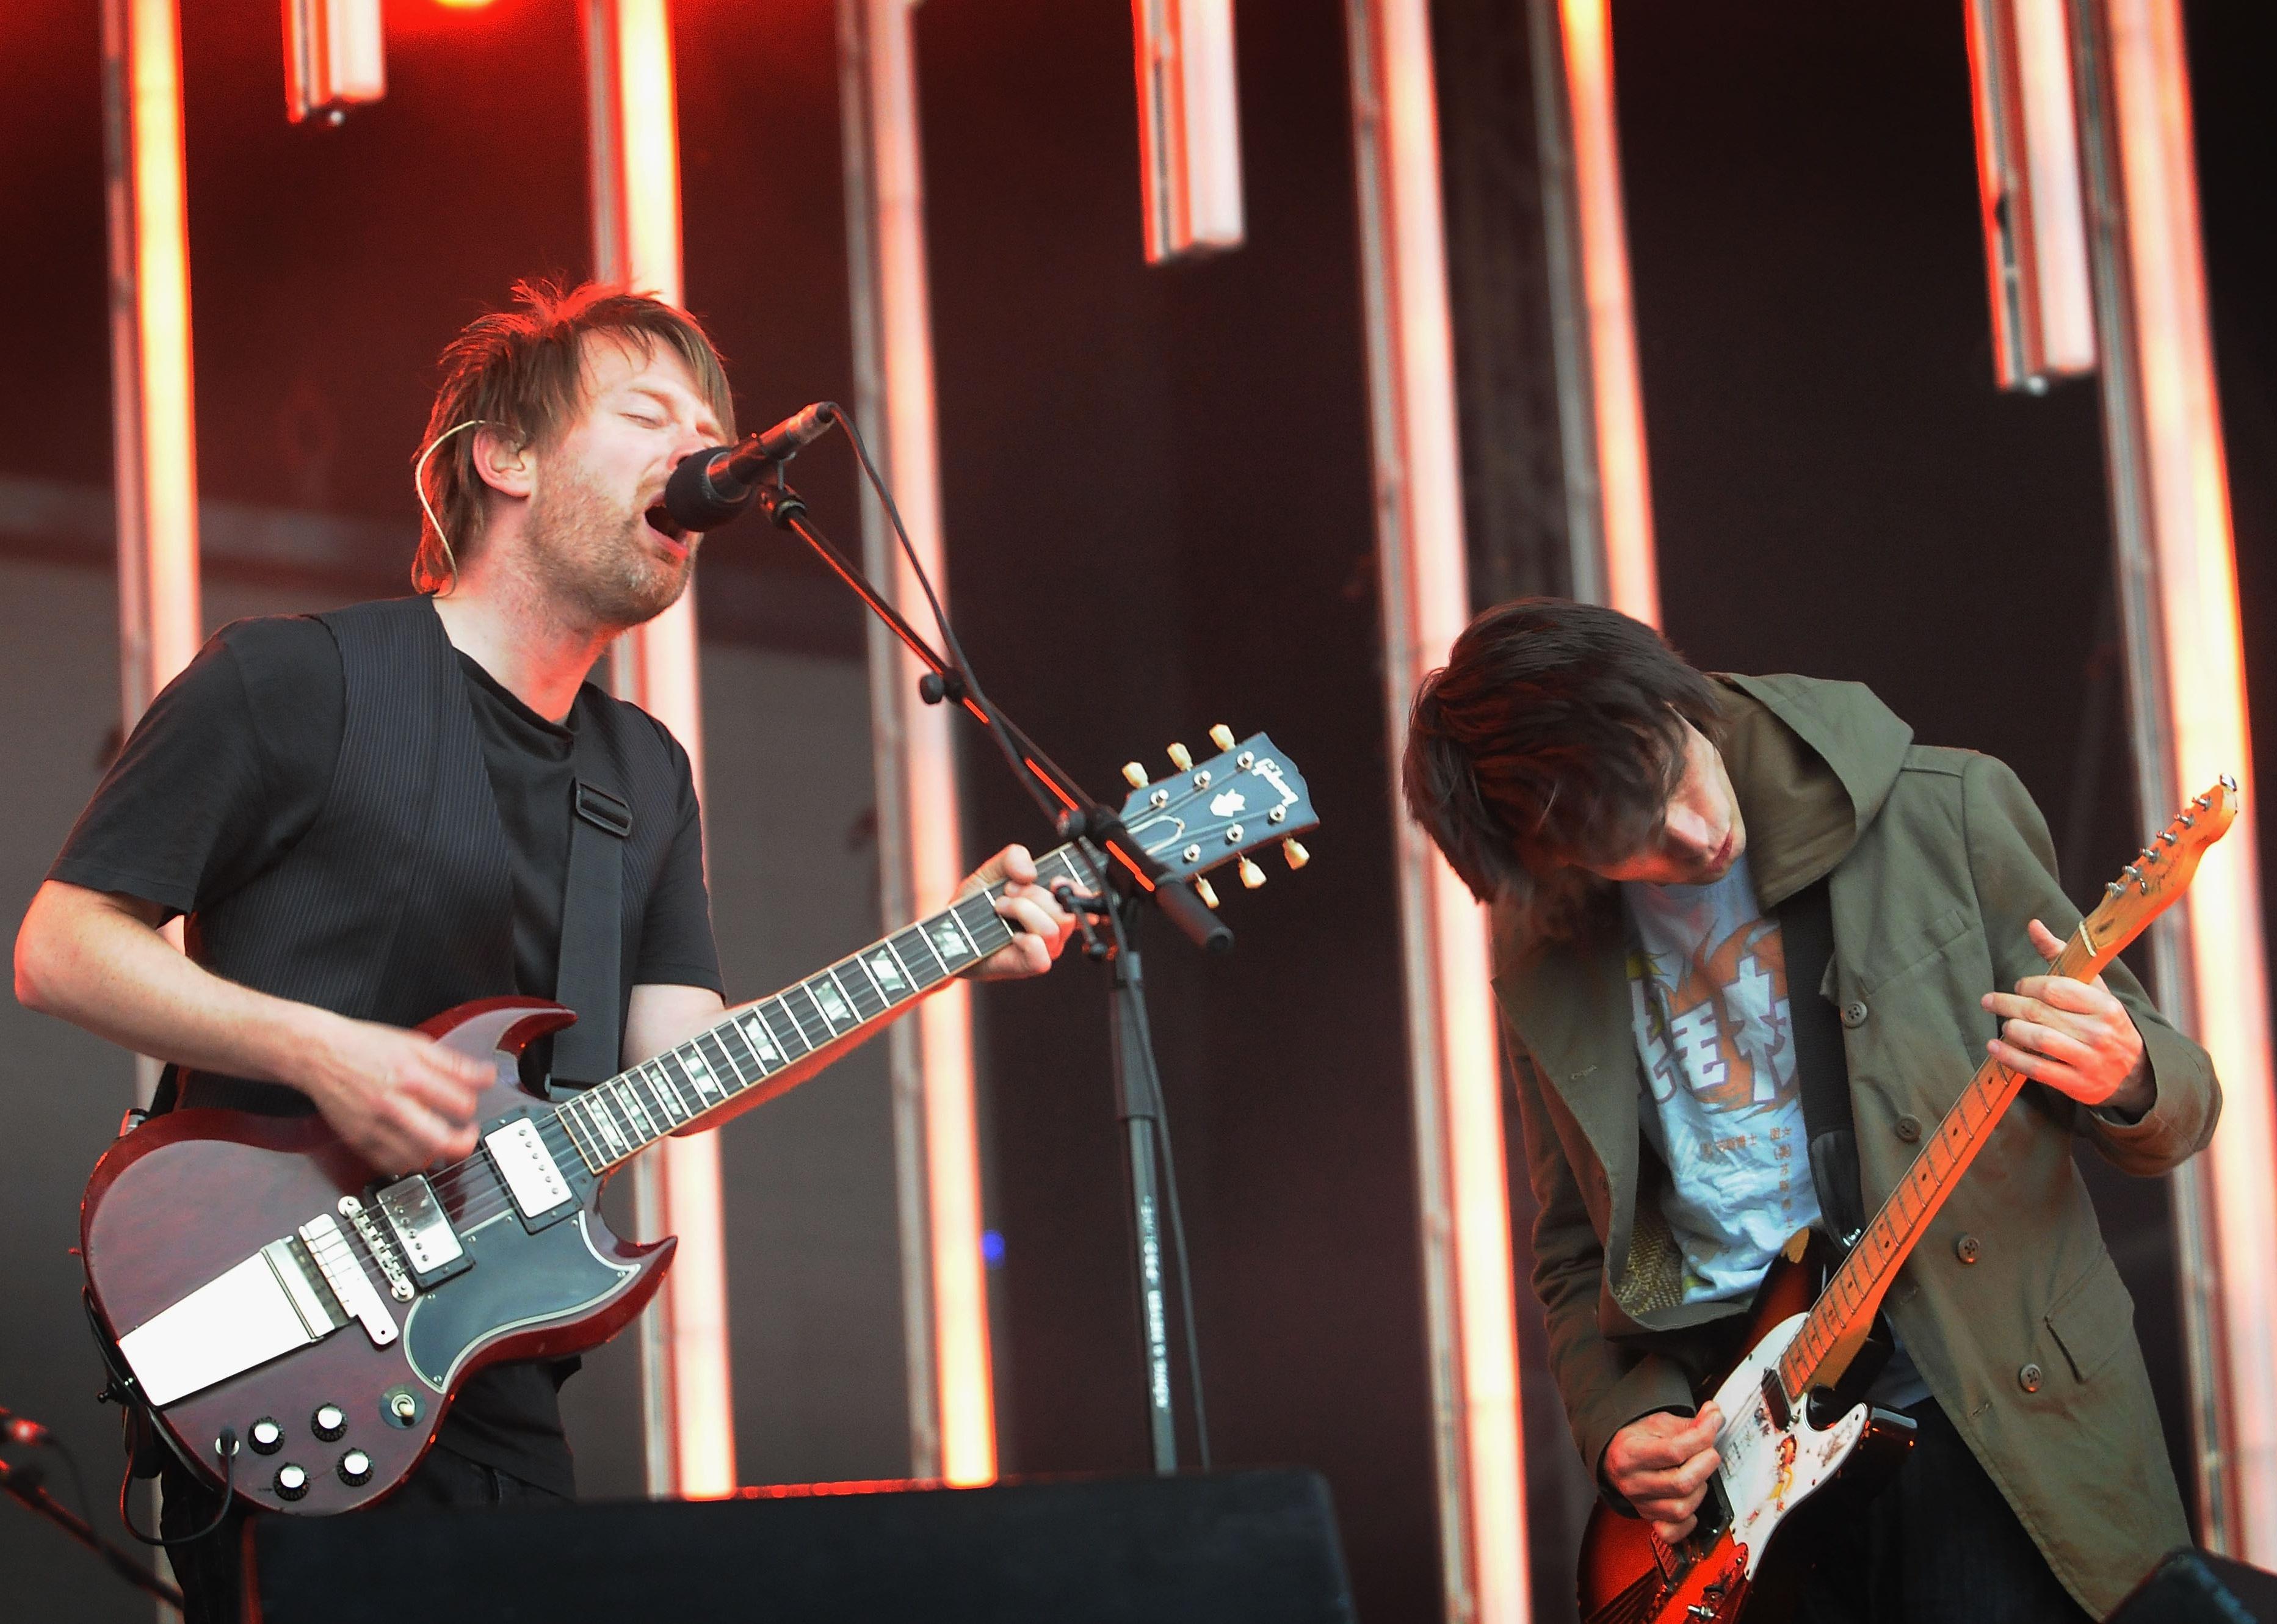 Thom Yorke and Jonny Greenwood of Radiohead perform on stage.